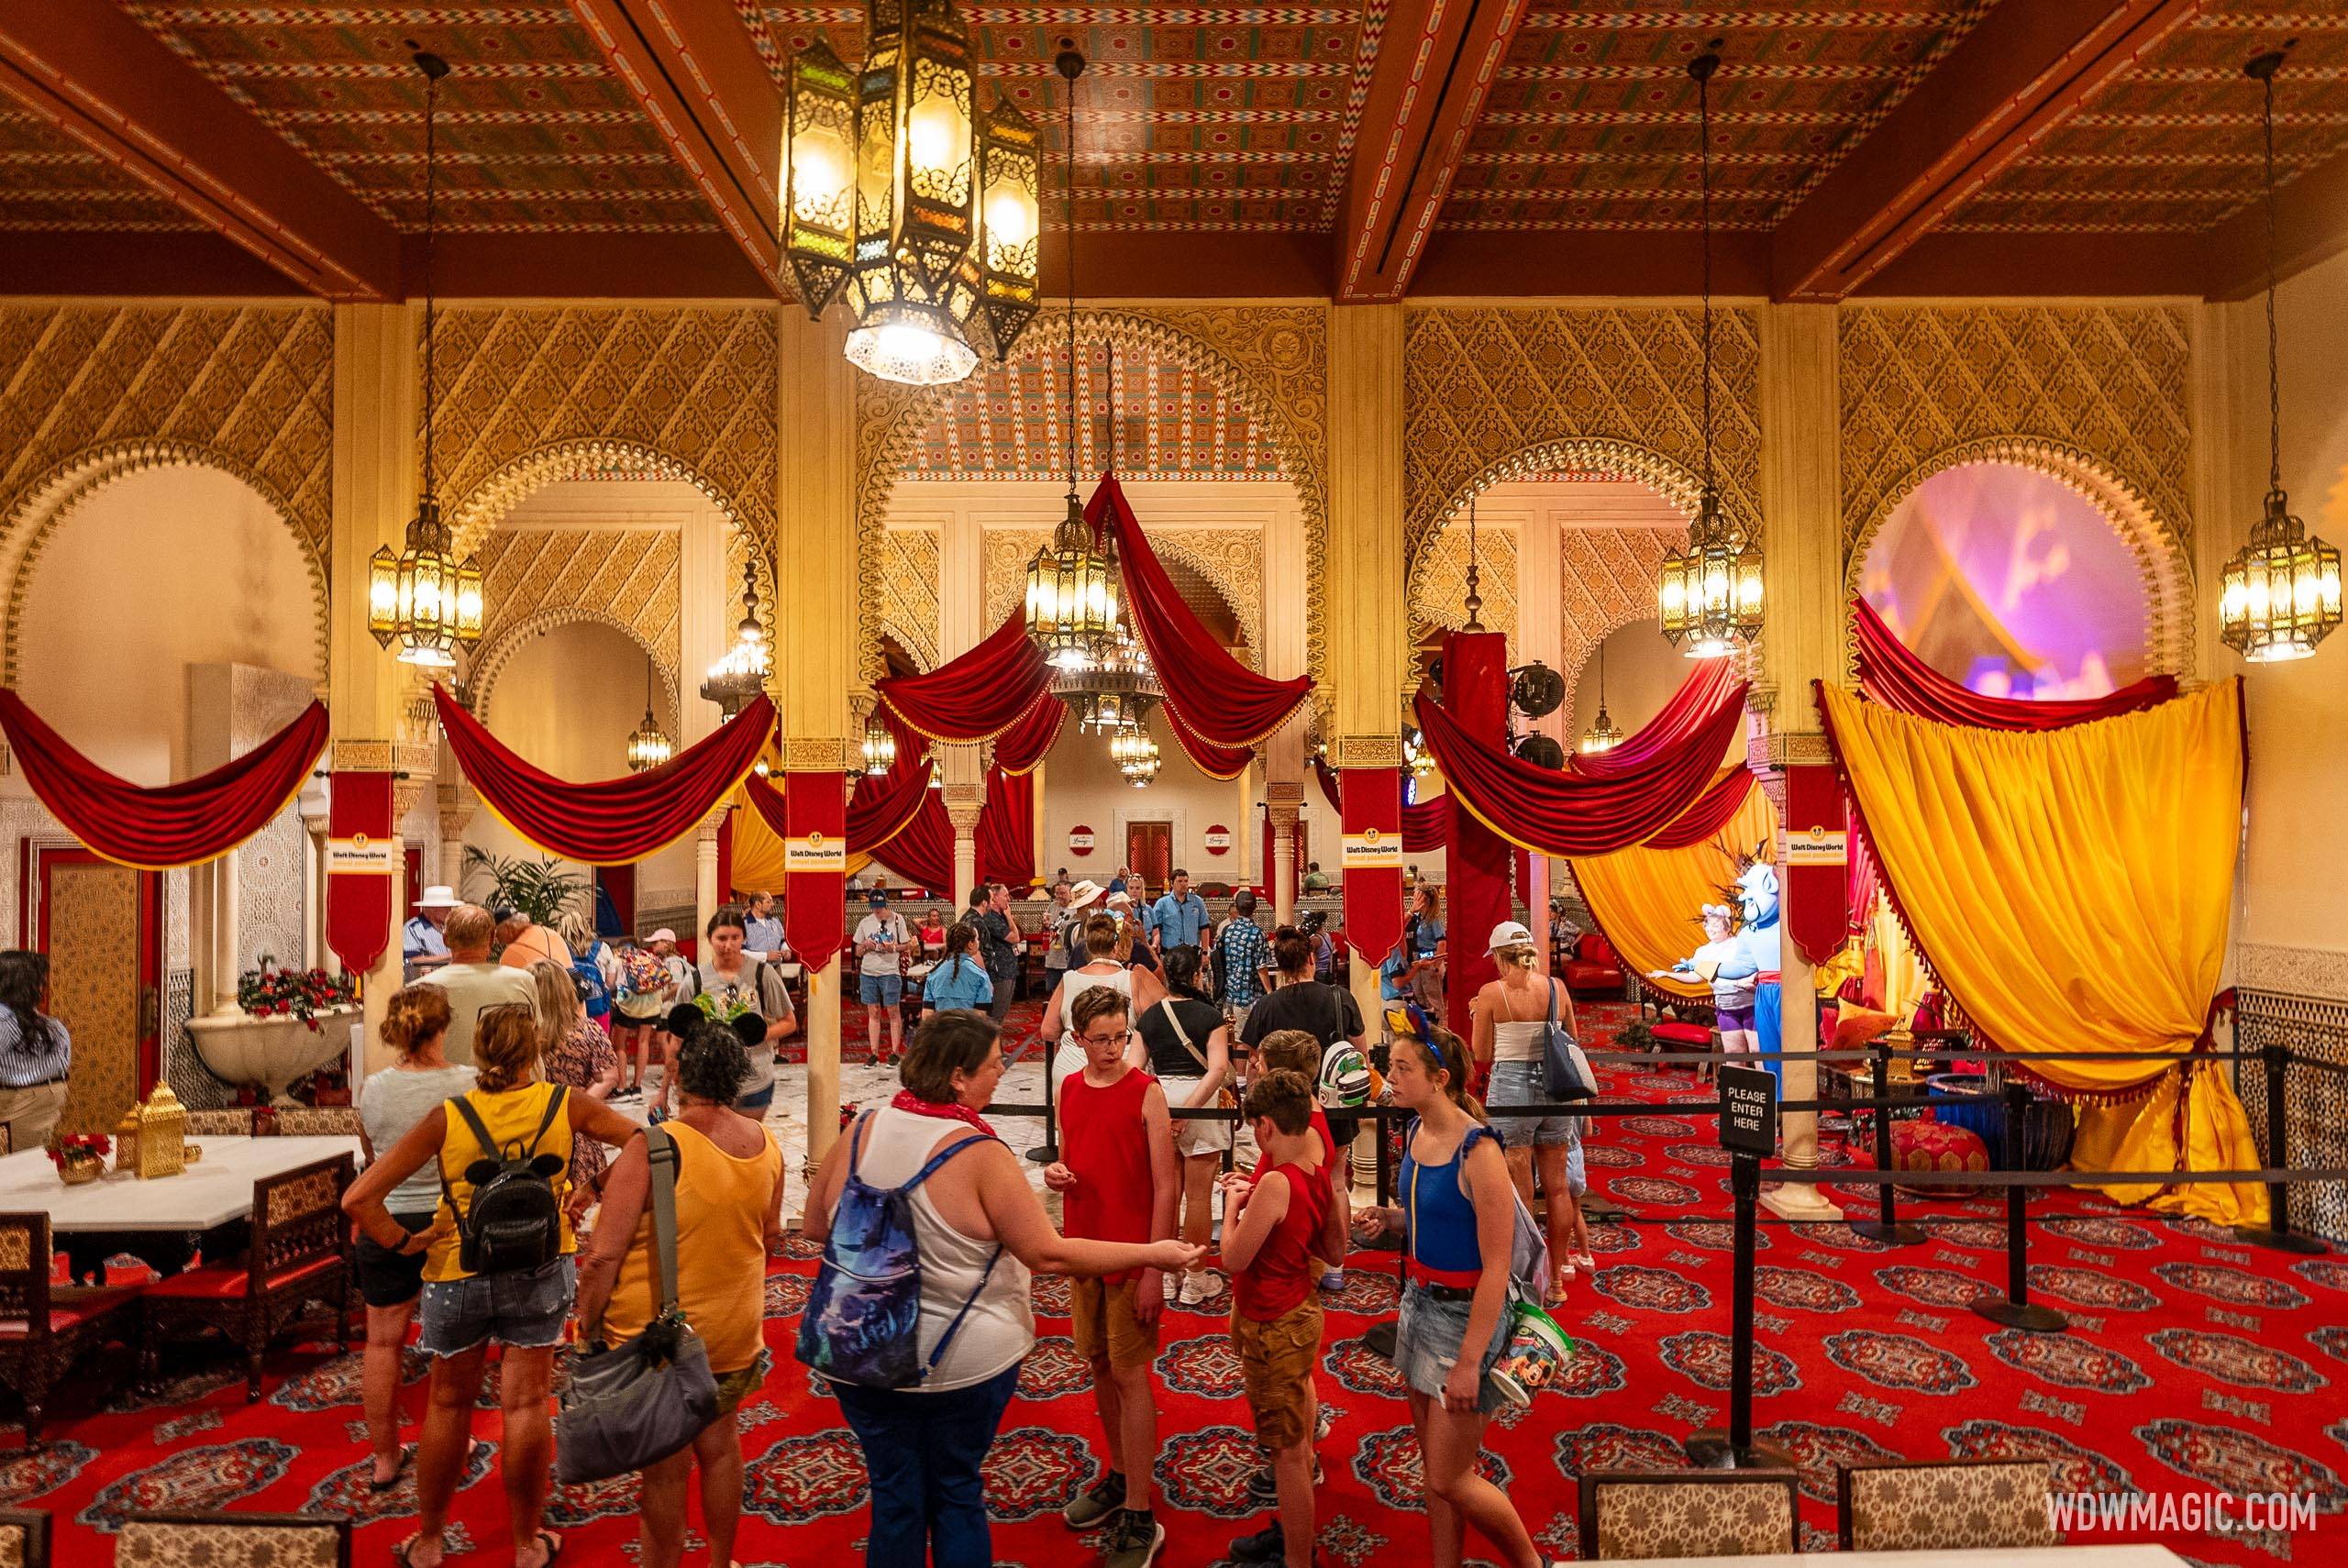 Walt Disney World Annual Passholder Lounge 2024